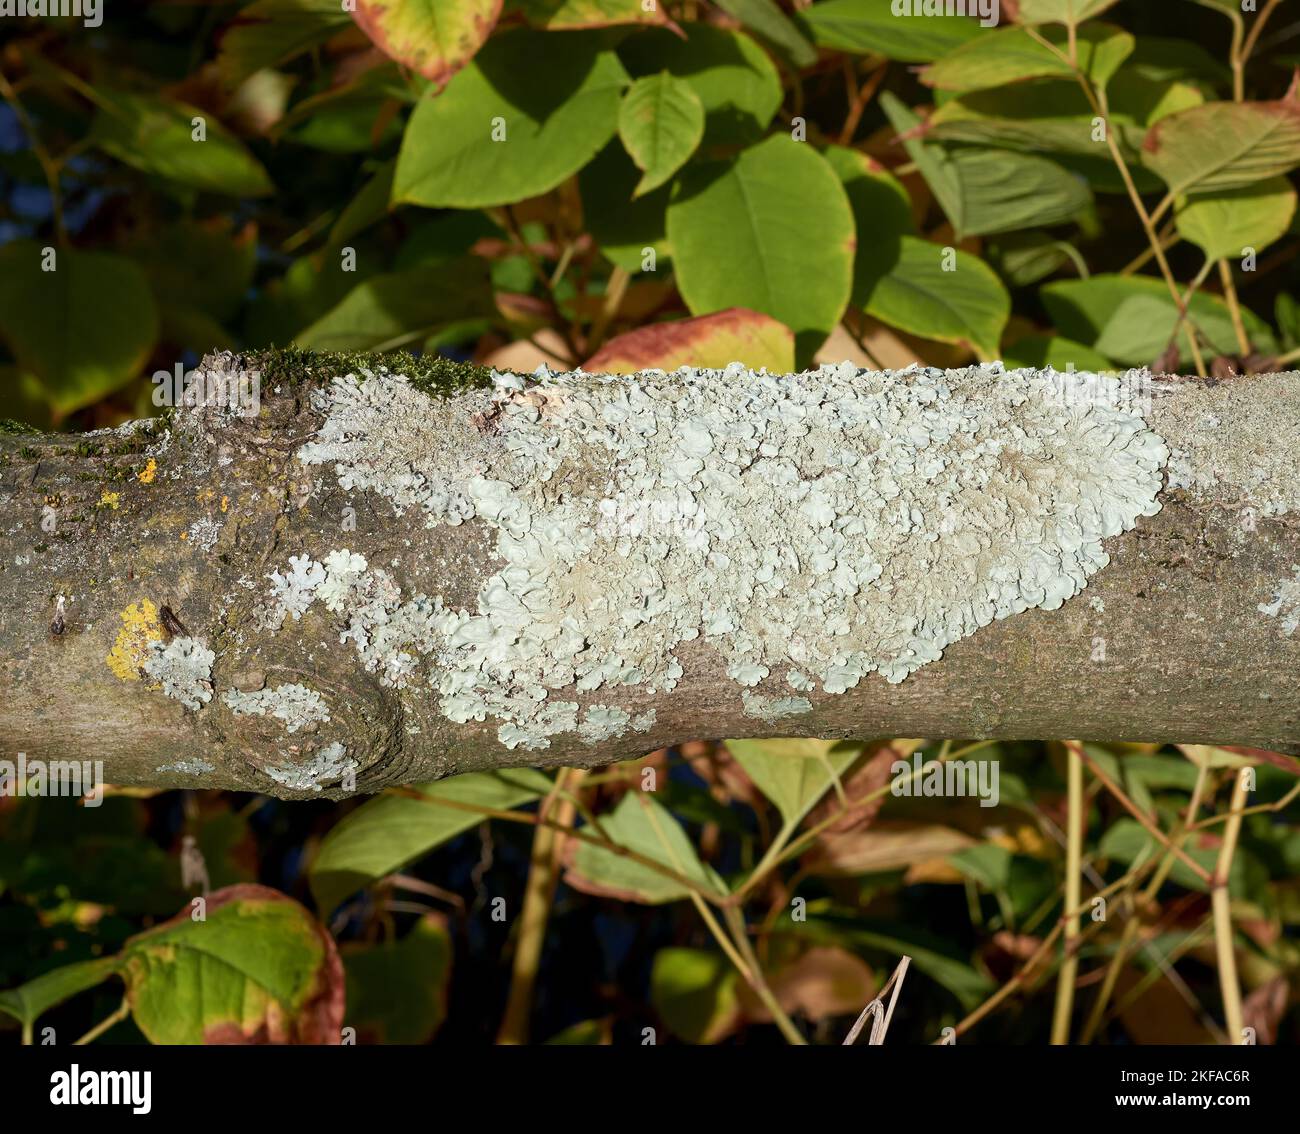 parmelia lichen (Parmelia sulcata)  on tree,Germany Stock Photo